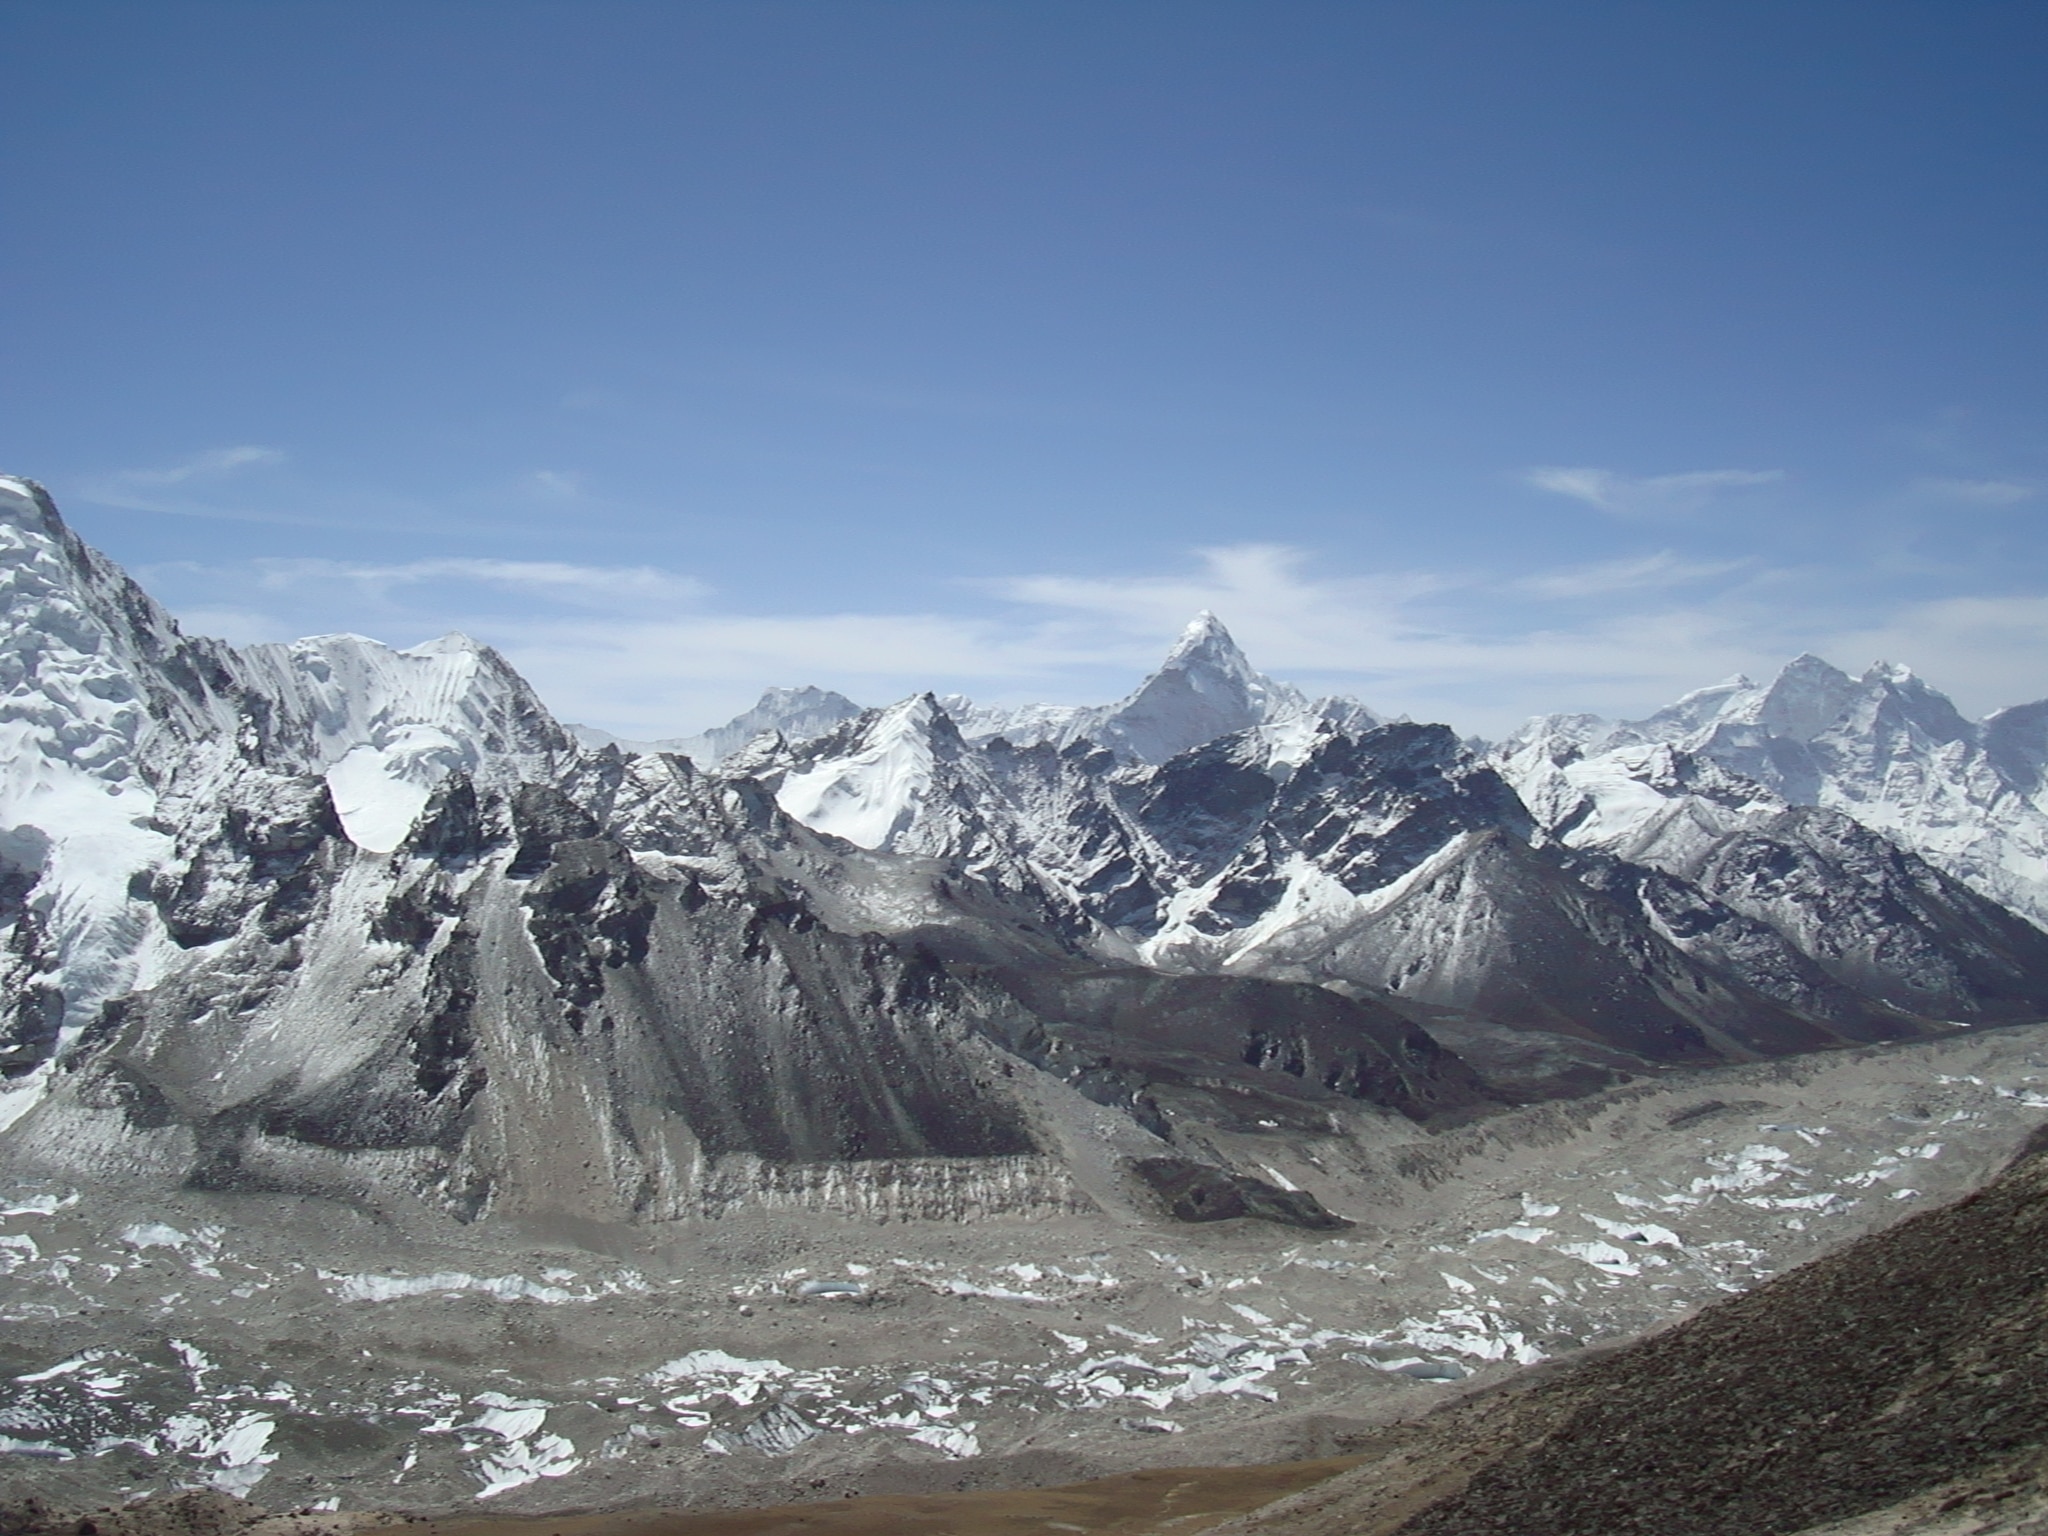 The view off Kala Phattar on the Everest base camp trek